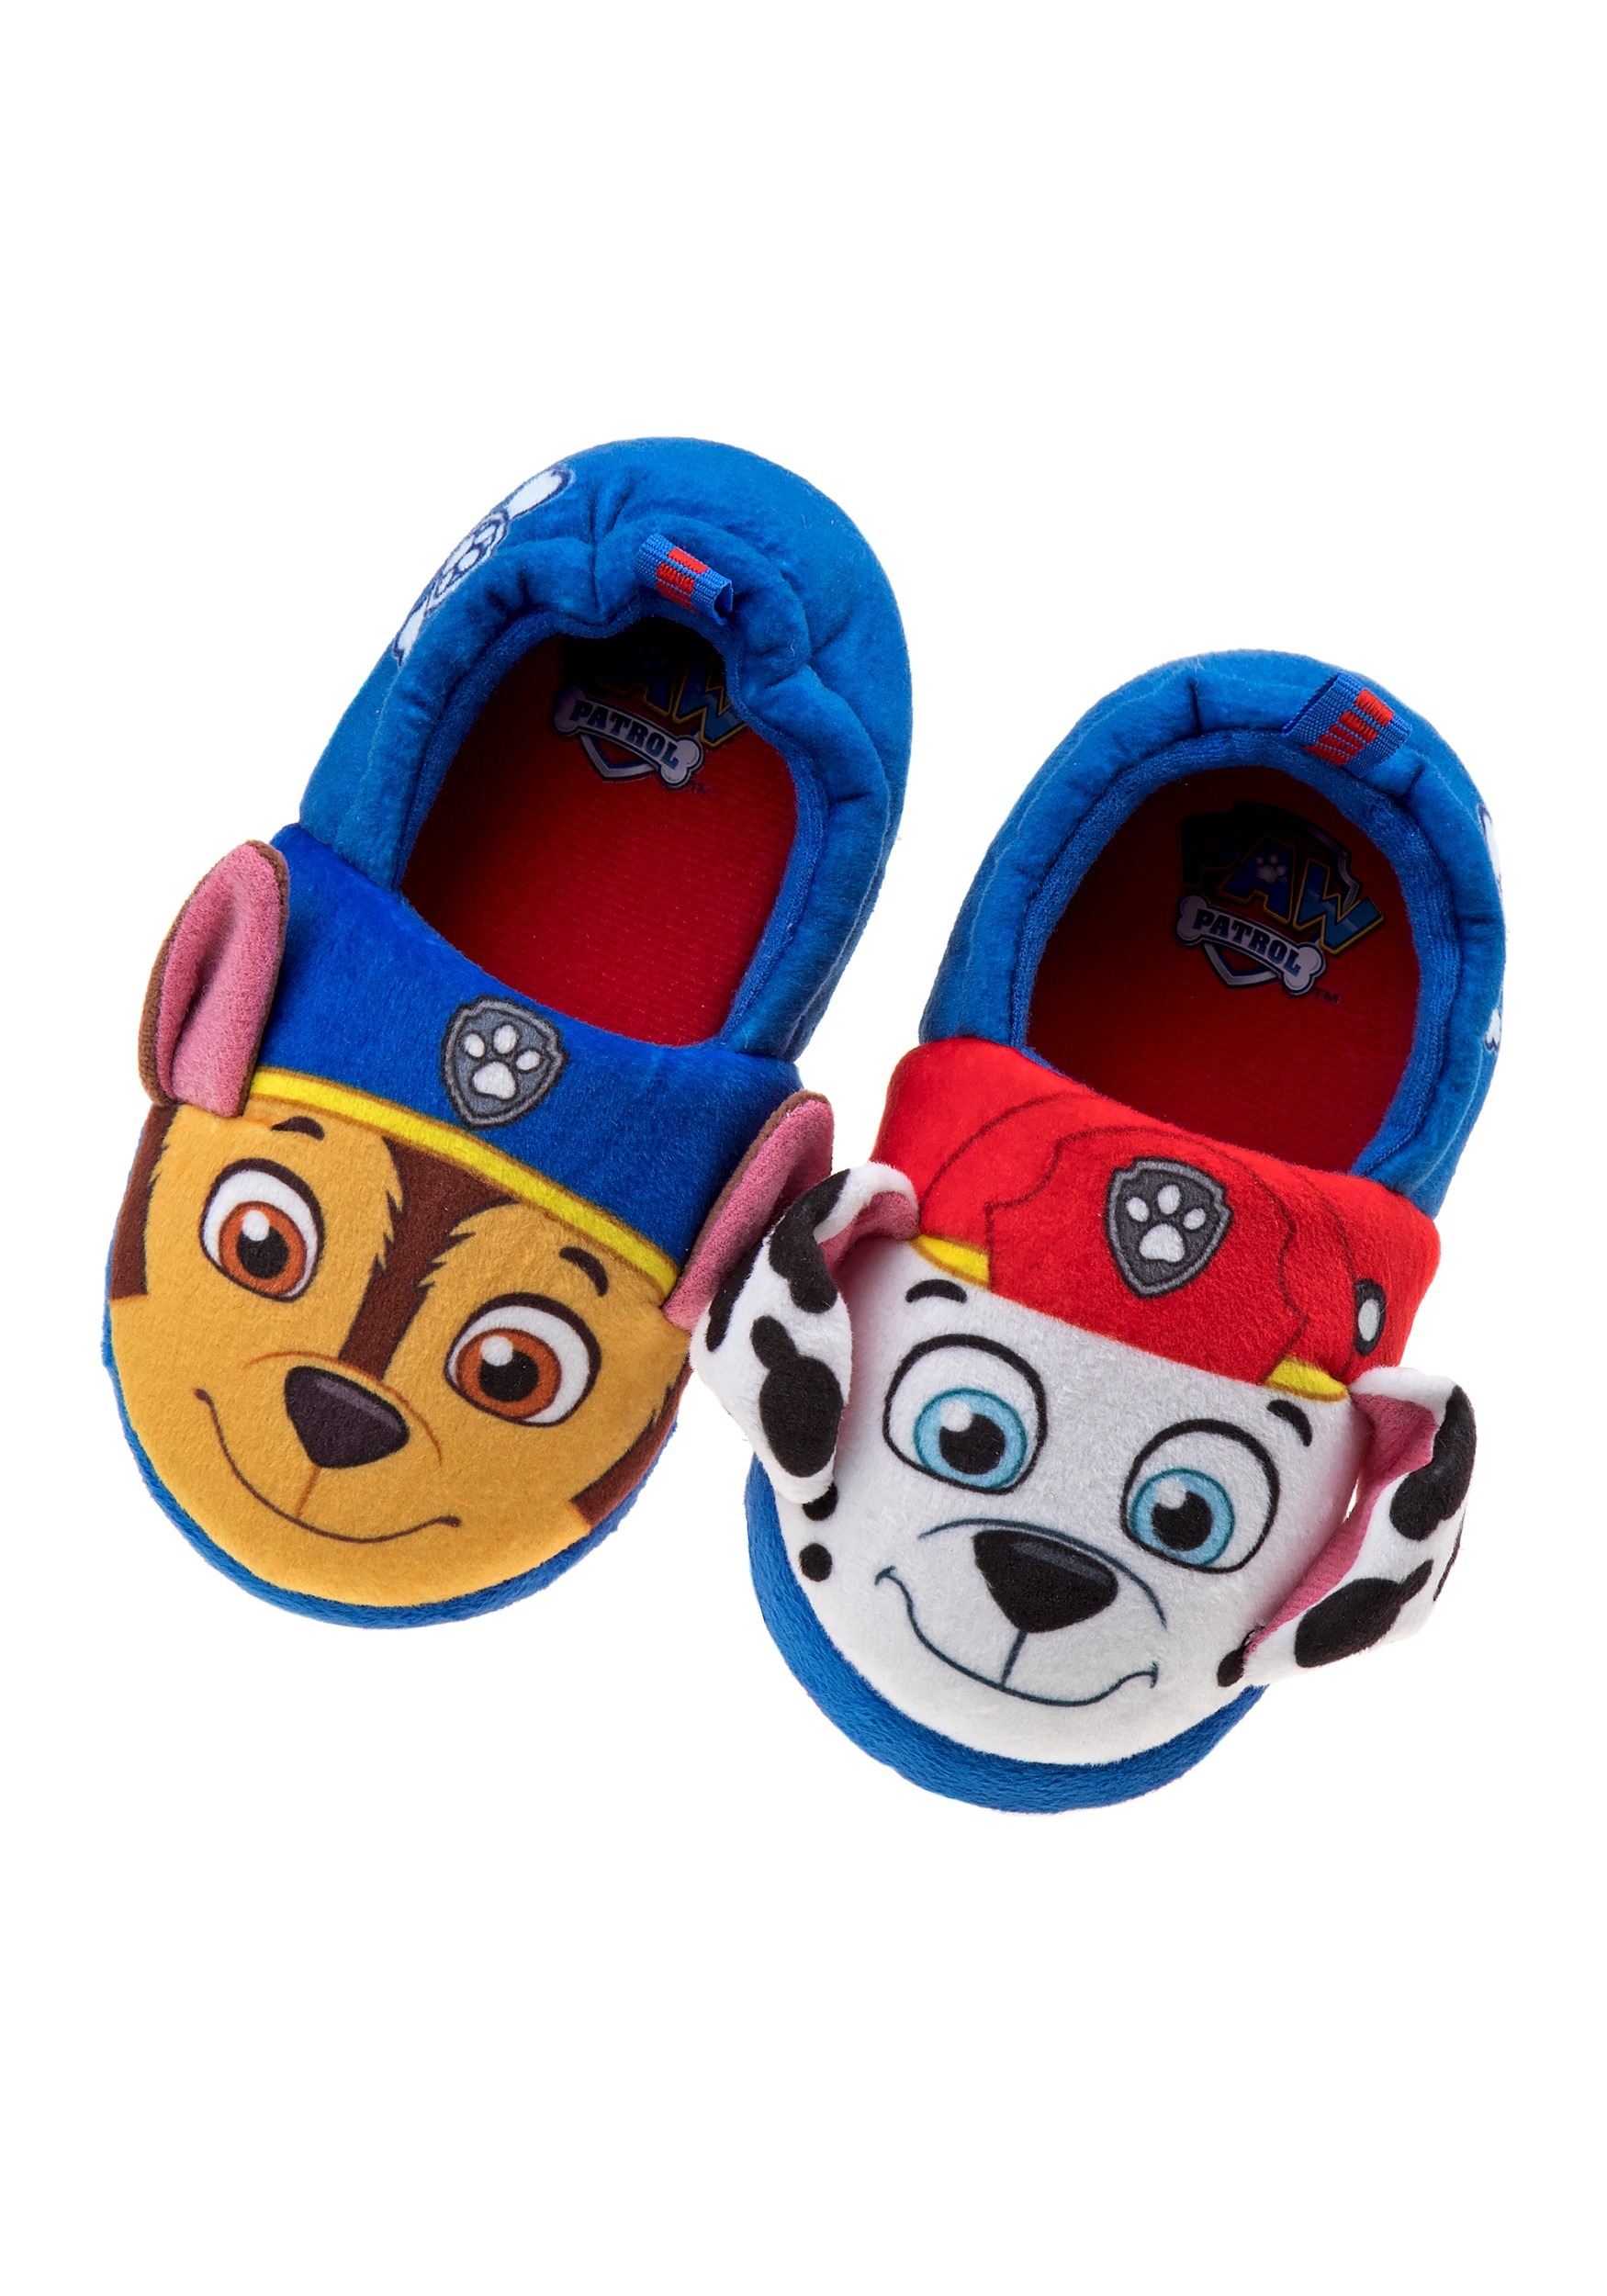 marshall paw patrol slippers